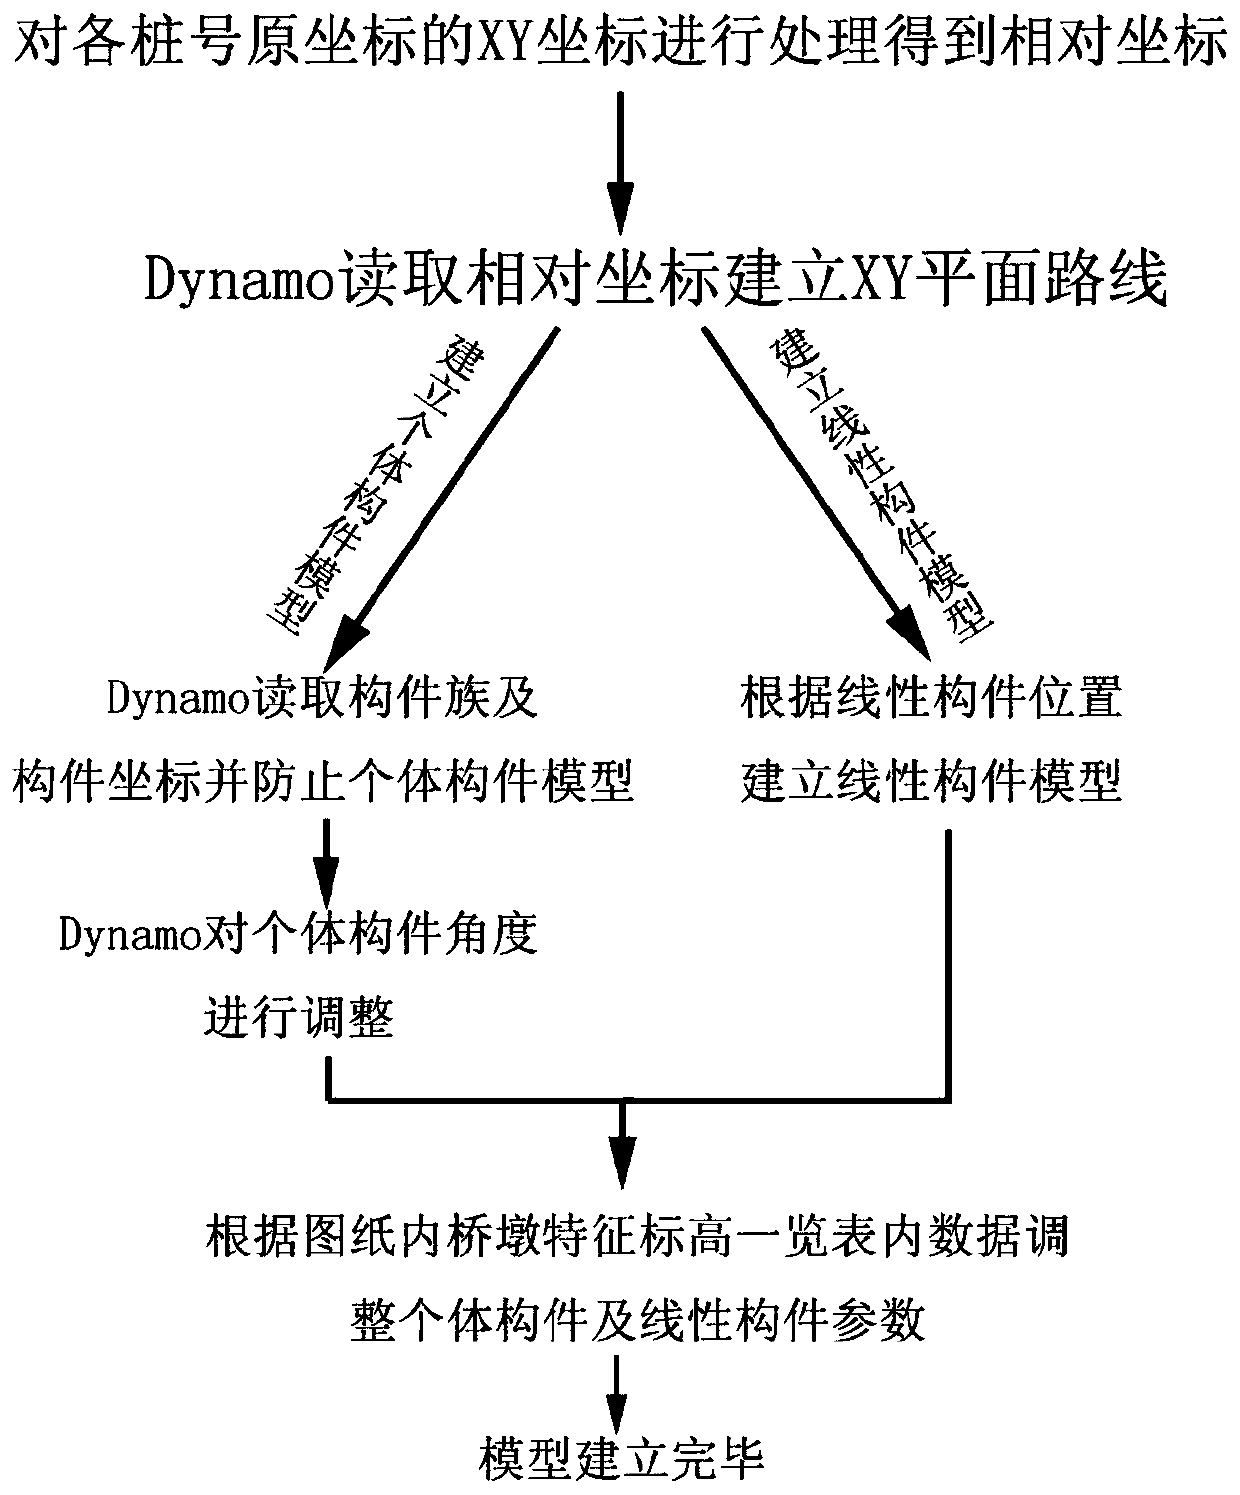 A method for establishing a bridge BIM model by adopting Dynamo software